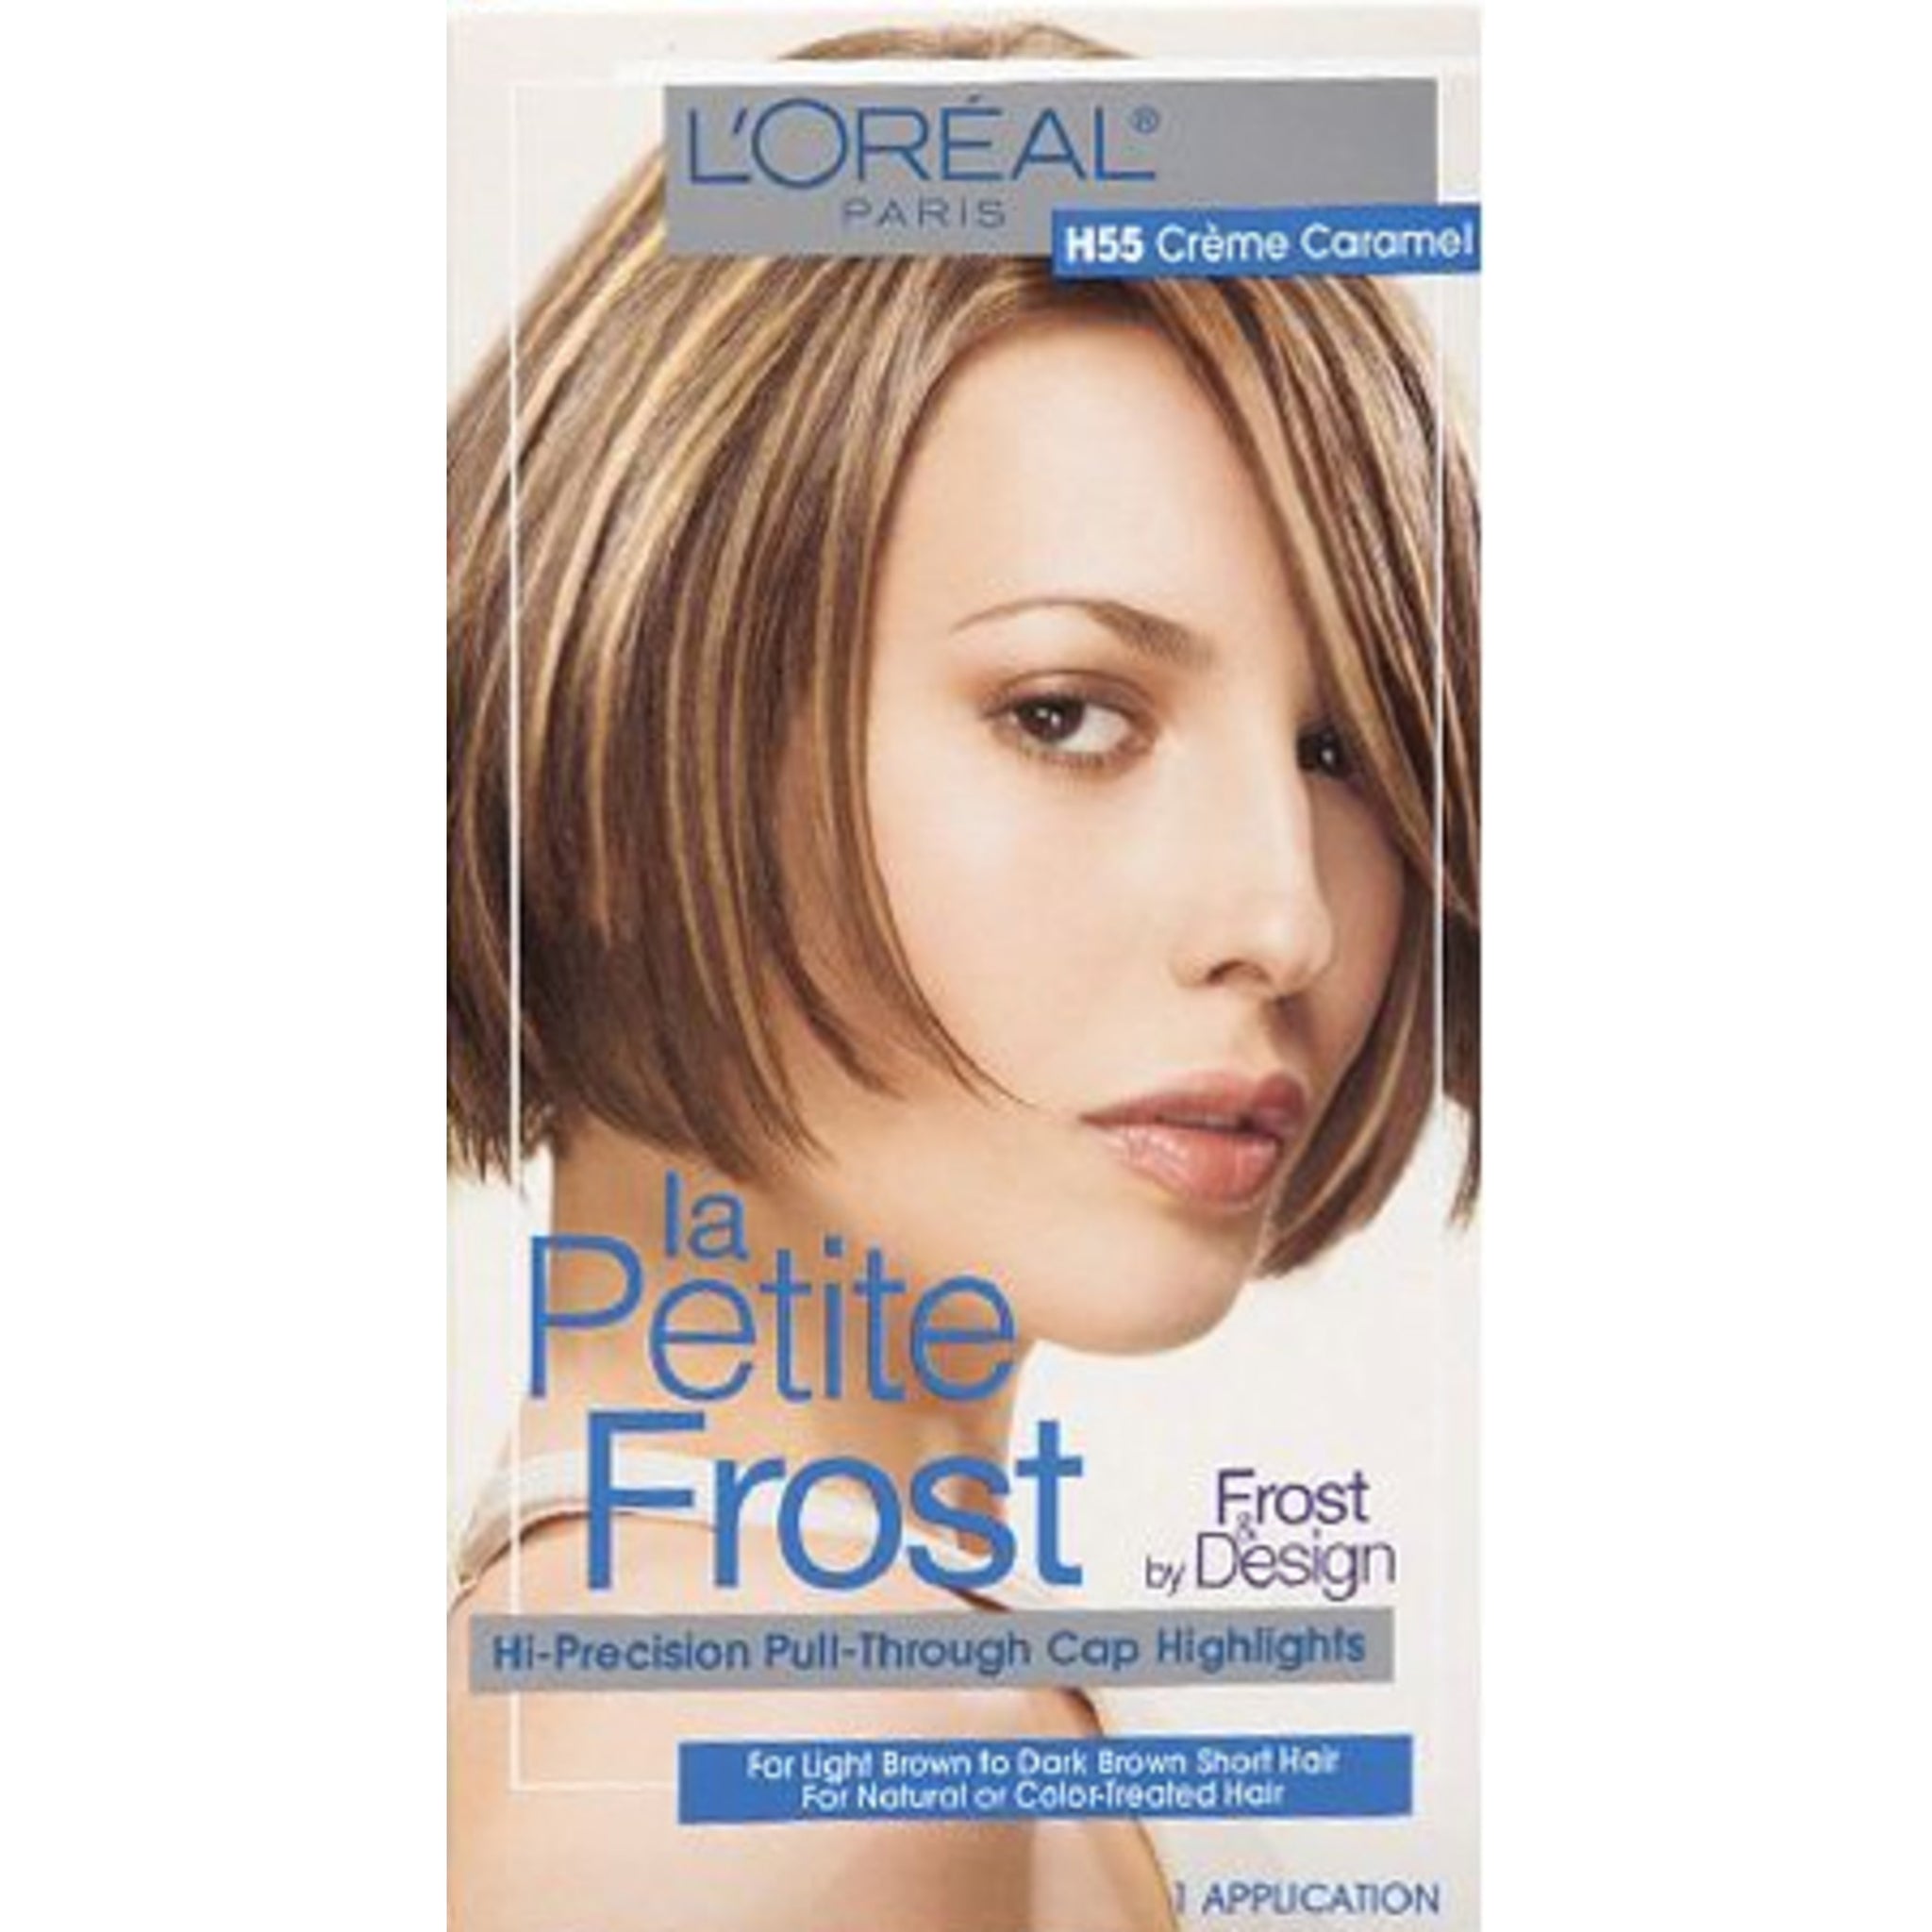 Le Petite Frost Cap Hair Highlights For Shorter Hair